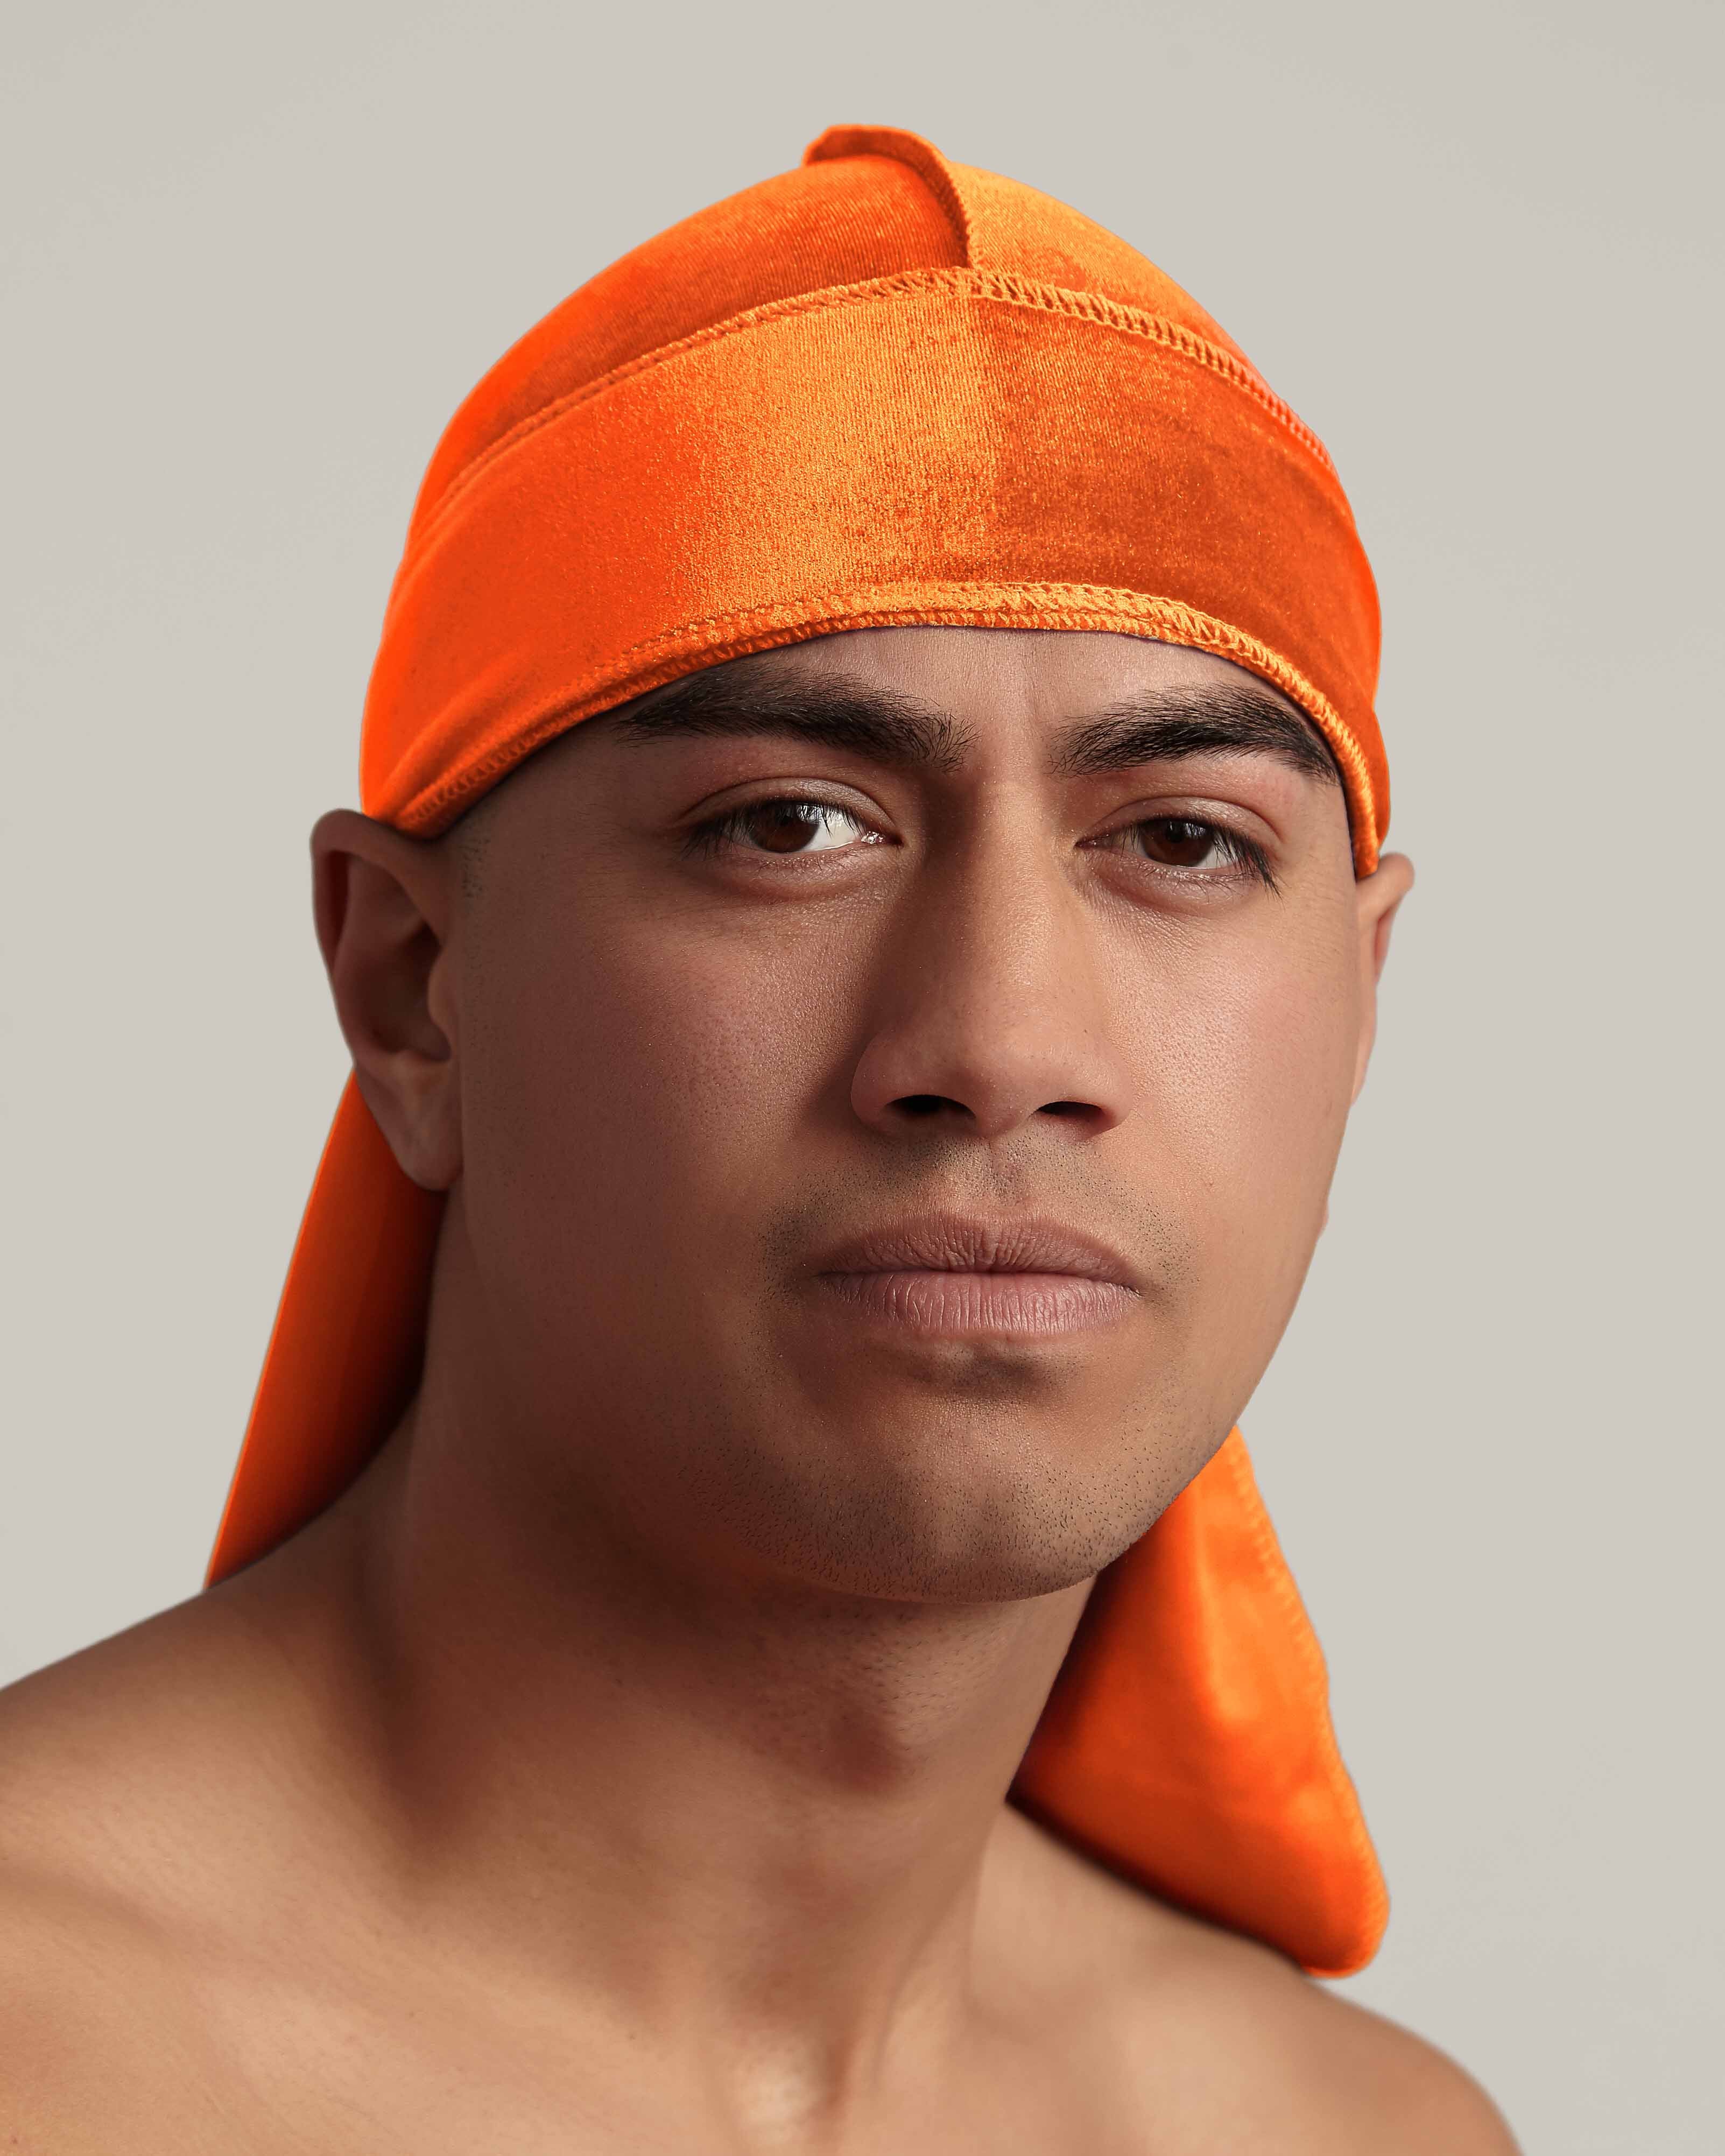 Rewahard Velvet Durag - Orange Tan